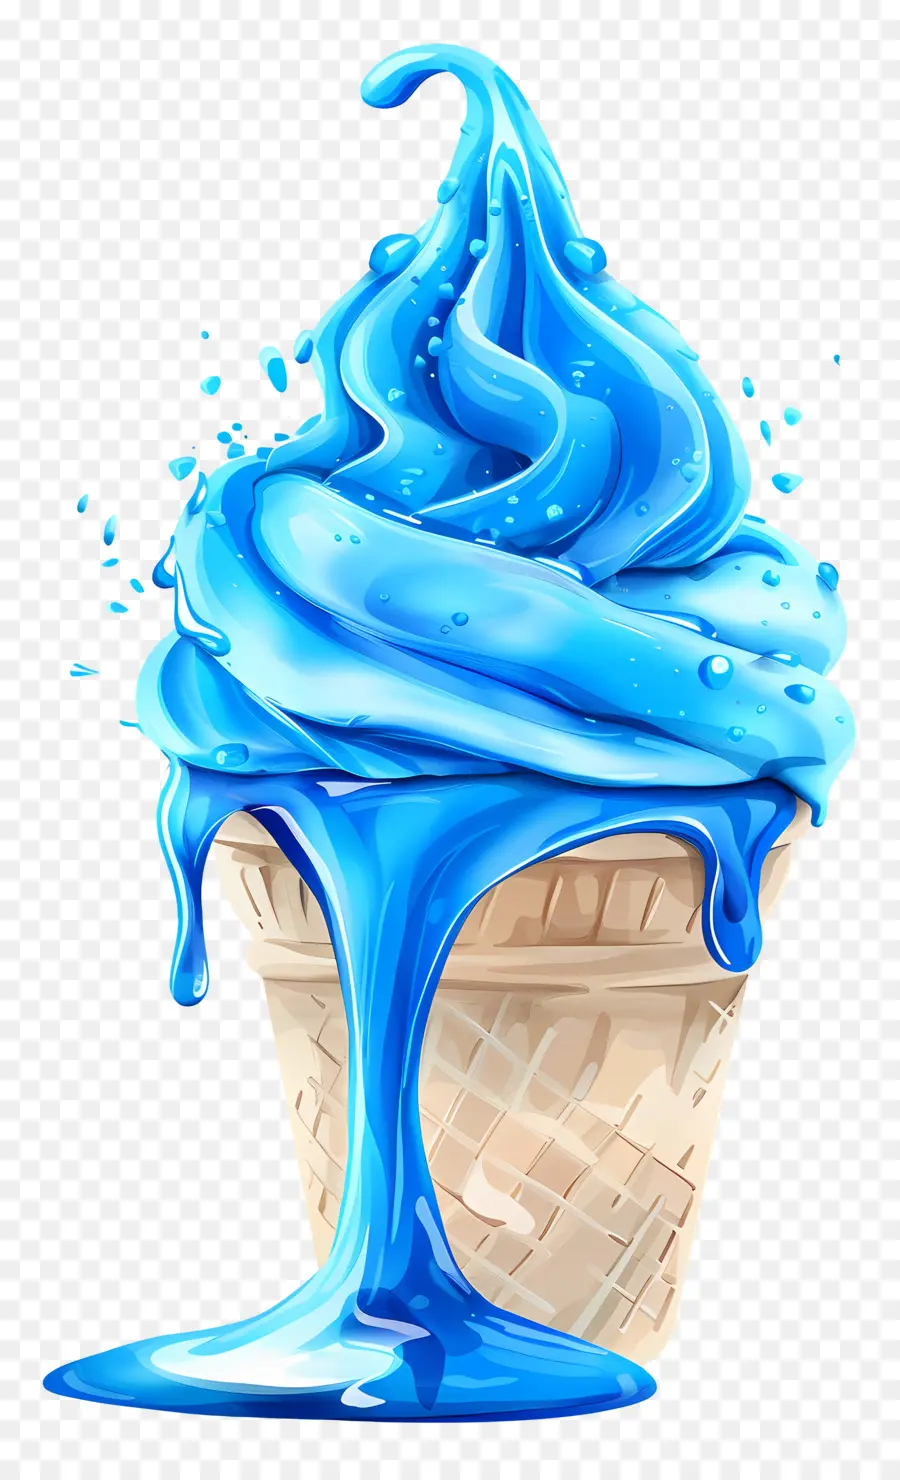 blue ice cream blue ice cream dessert sweet treat ice cream cone